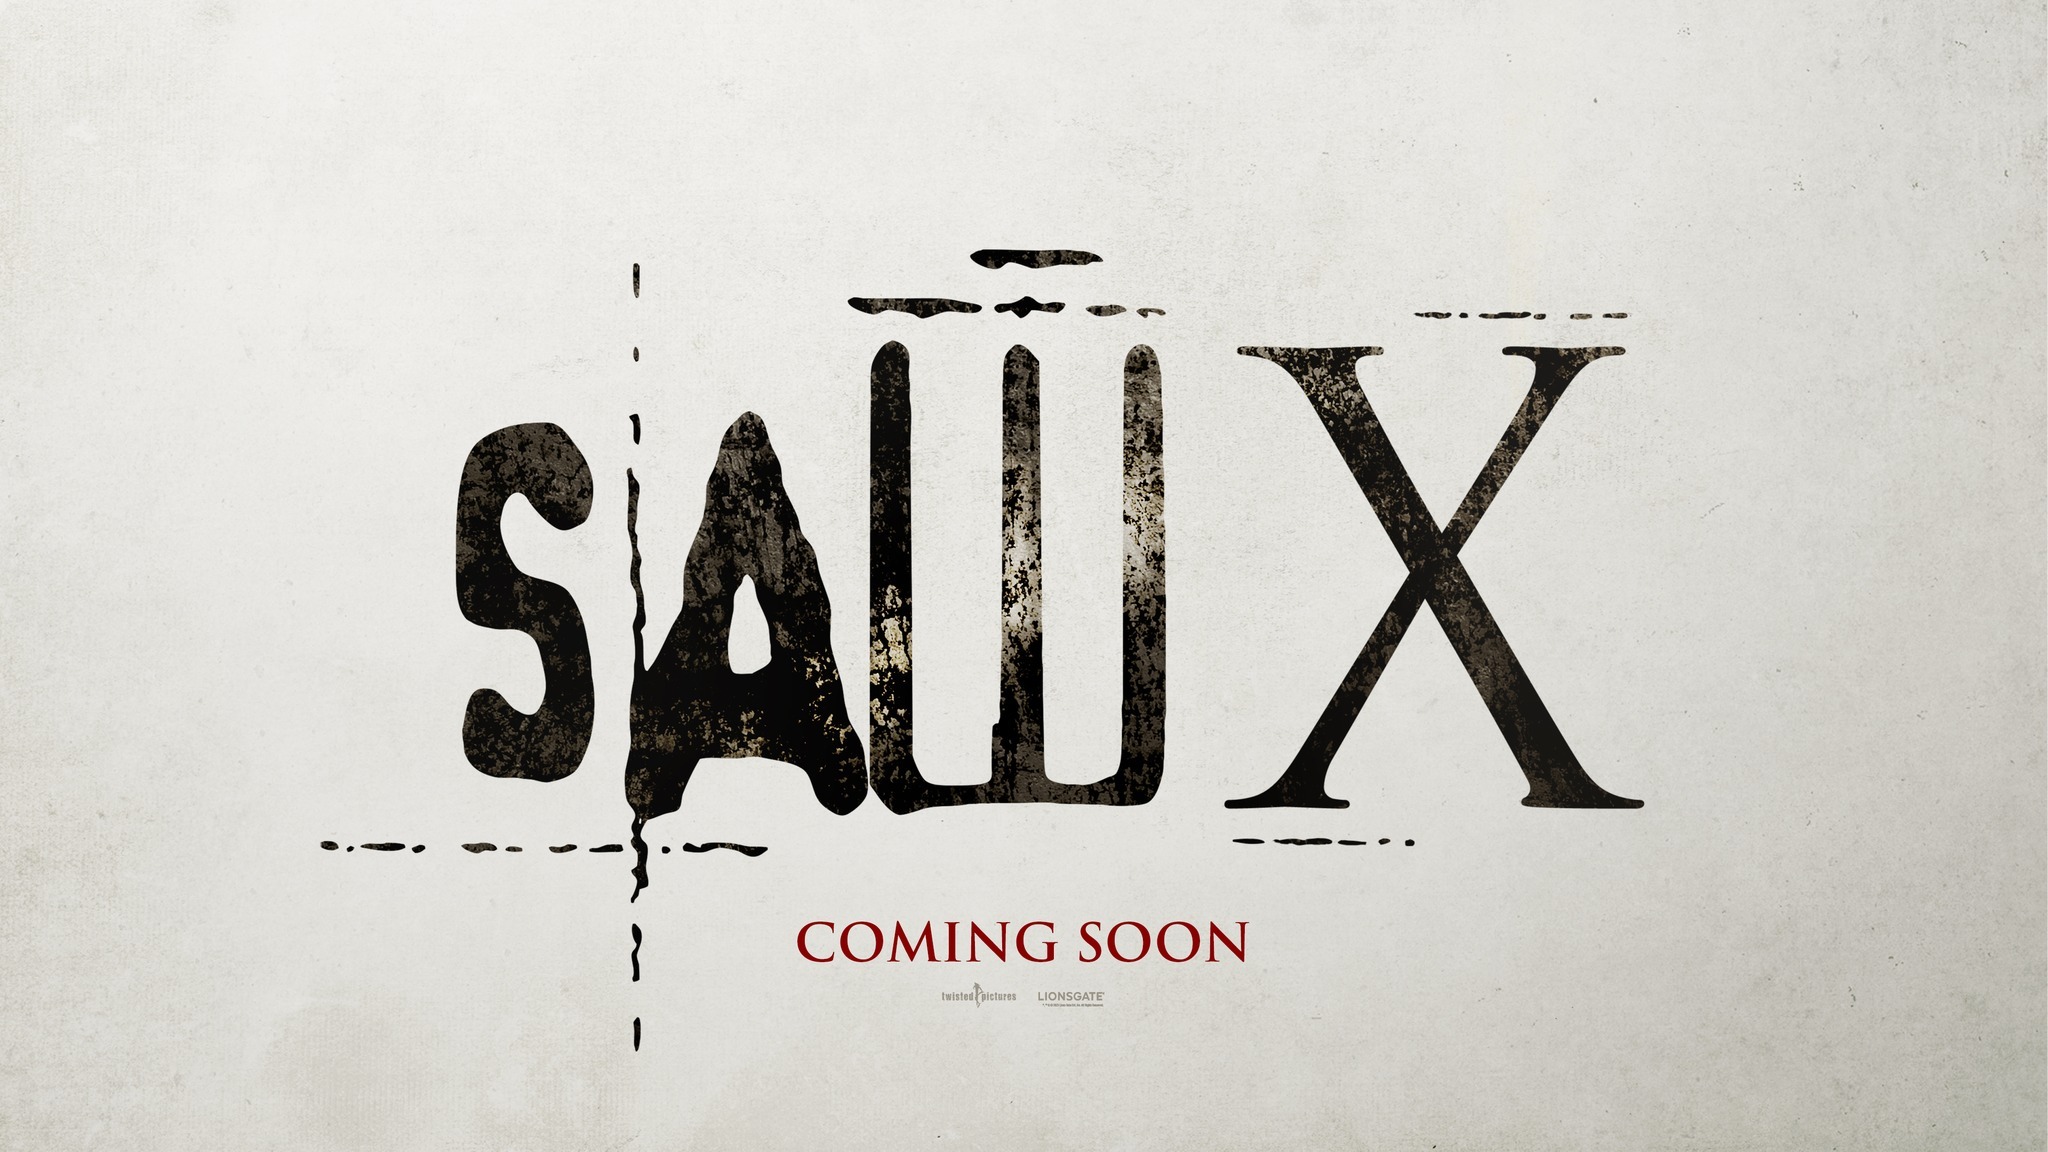 SAW X (2023) Official Trailer – Tobin Bell